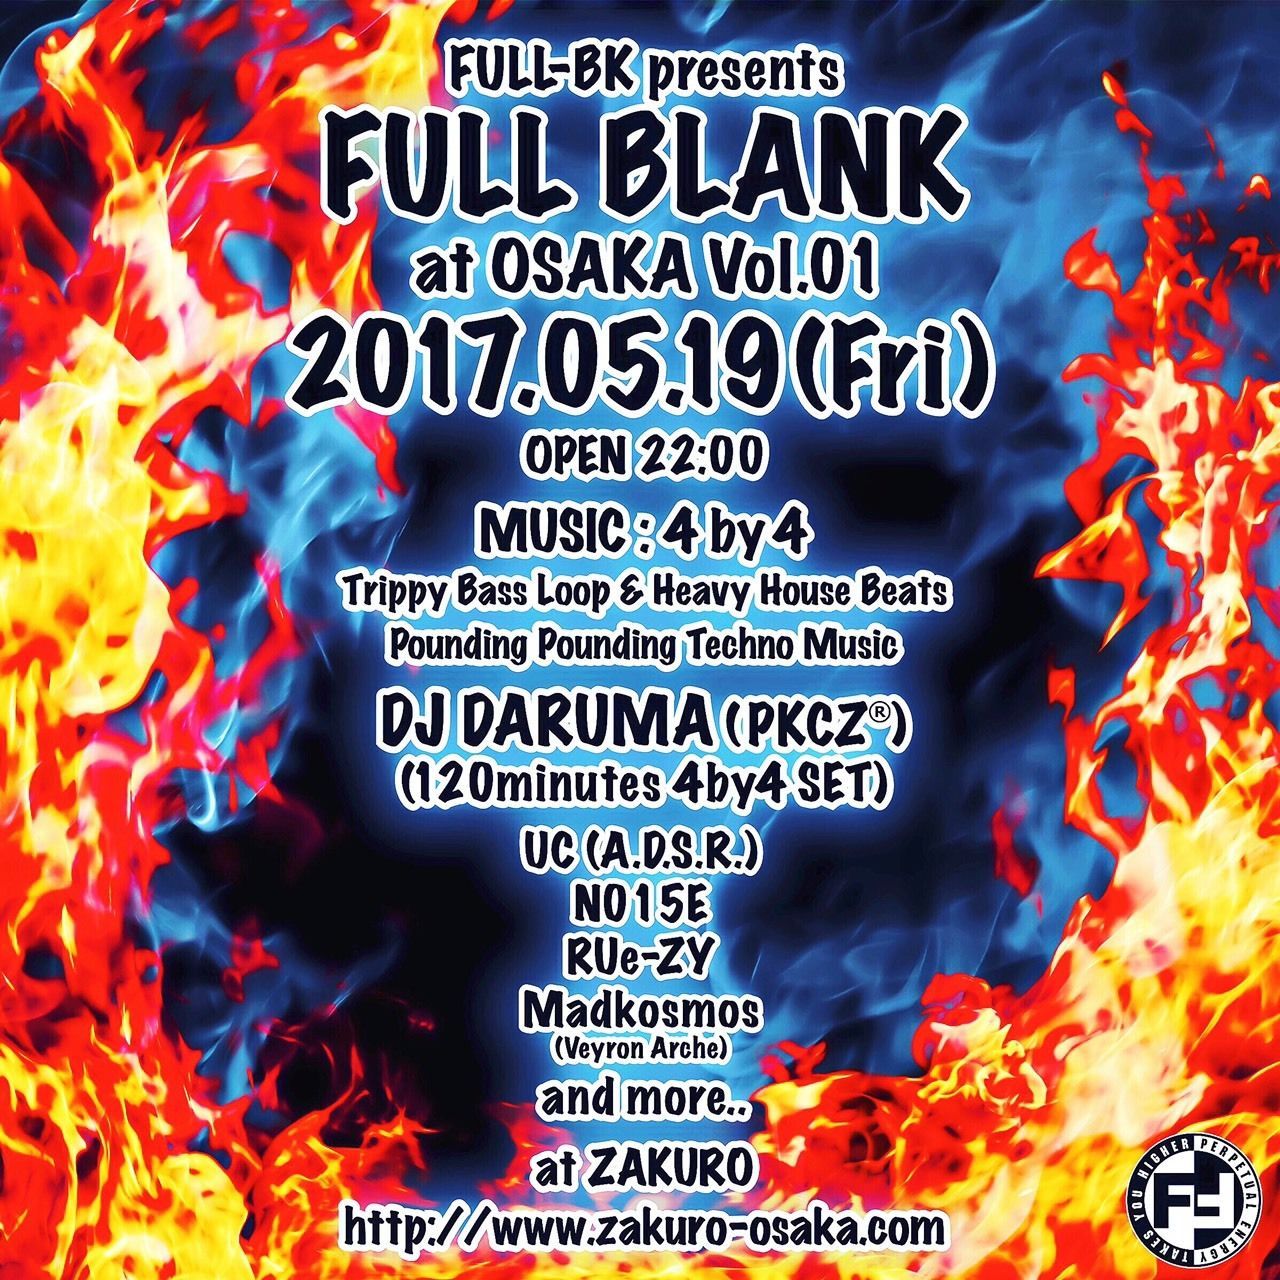 Full-Bk Presents Fullblank at Osaka Vol.01